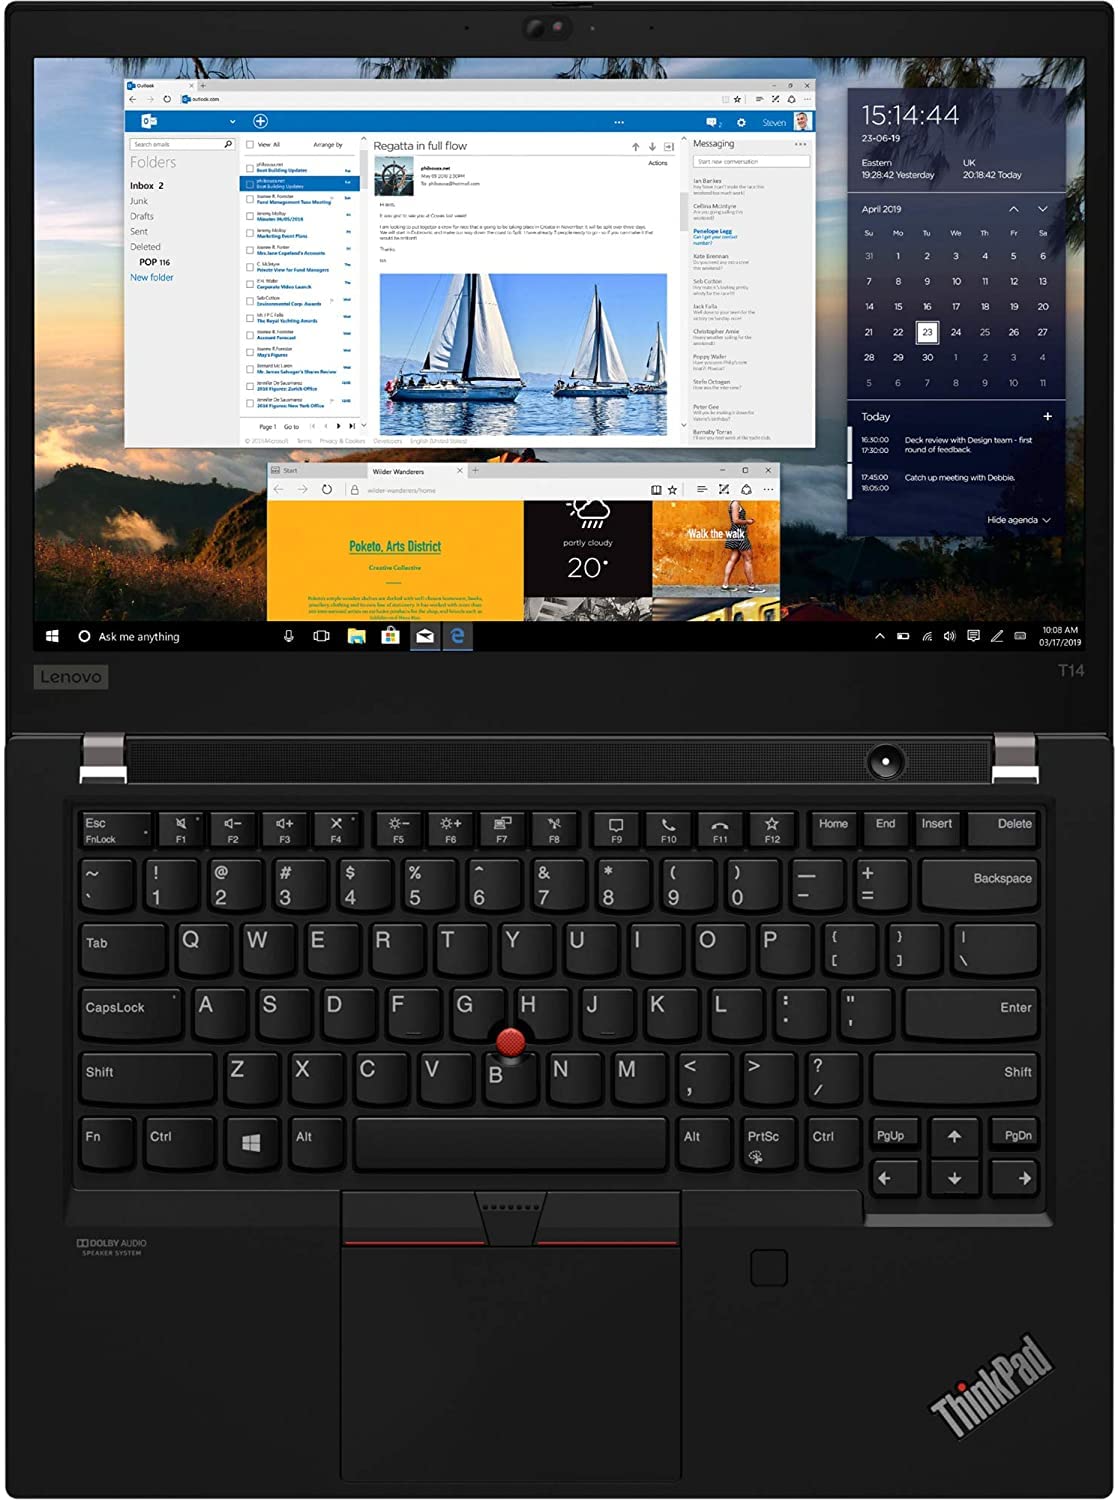 Lenovo ThinkPad T14 Gen 1, Touchscreen - i7-10510U (4.9GHz), 16GB DDR4, 1TB NVMe, UHD Graphics, Fingerprint & SD Card Reader, vPro, WiFi 6 & BT 5.1, Backlit KYB, Windows 11 Pro - Notebook (Renewed)